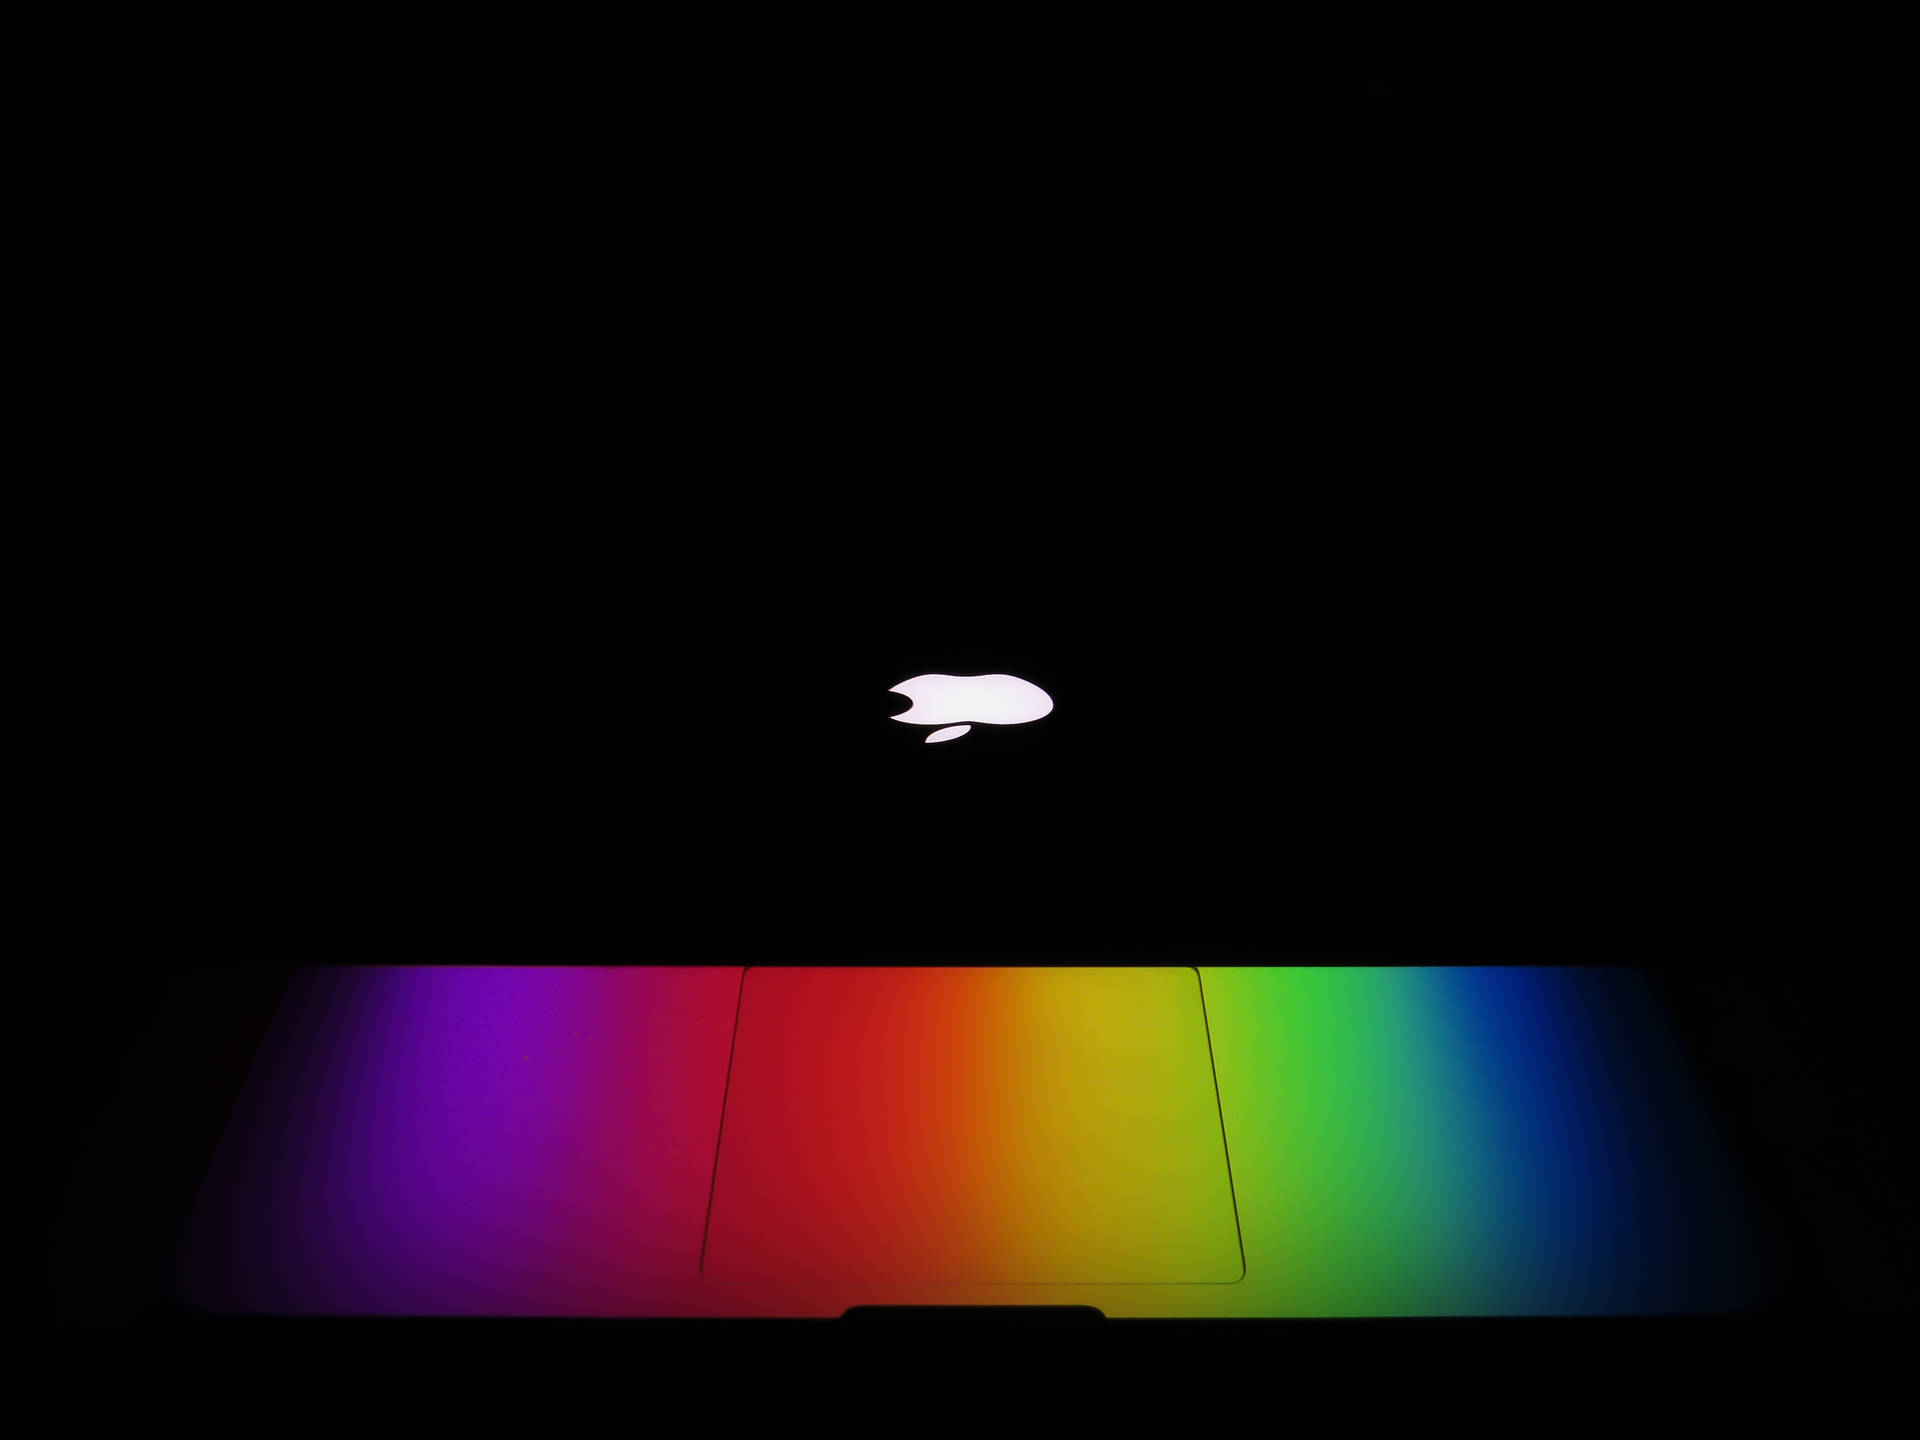 Rainbow MacBook Mac OS Wallpaper